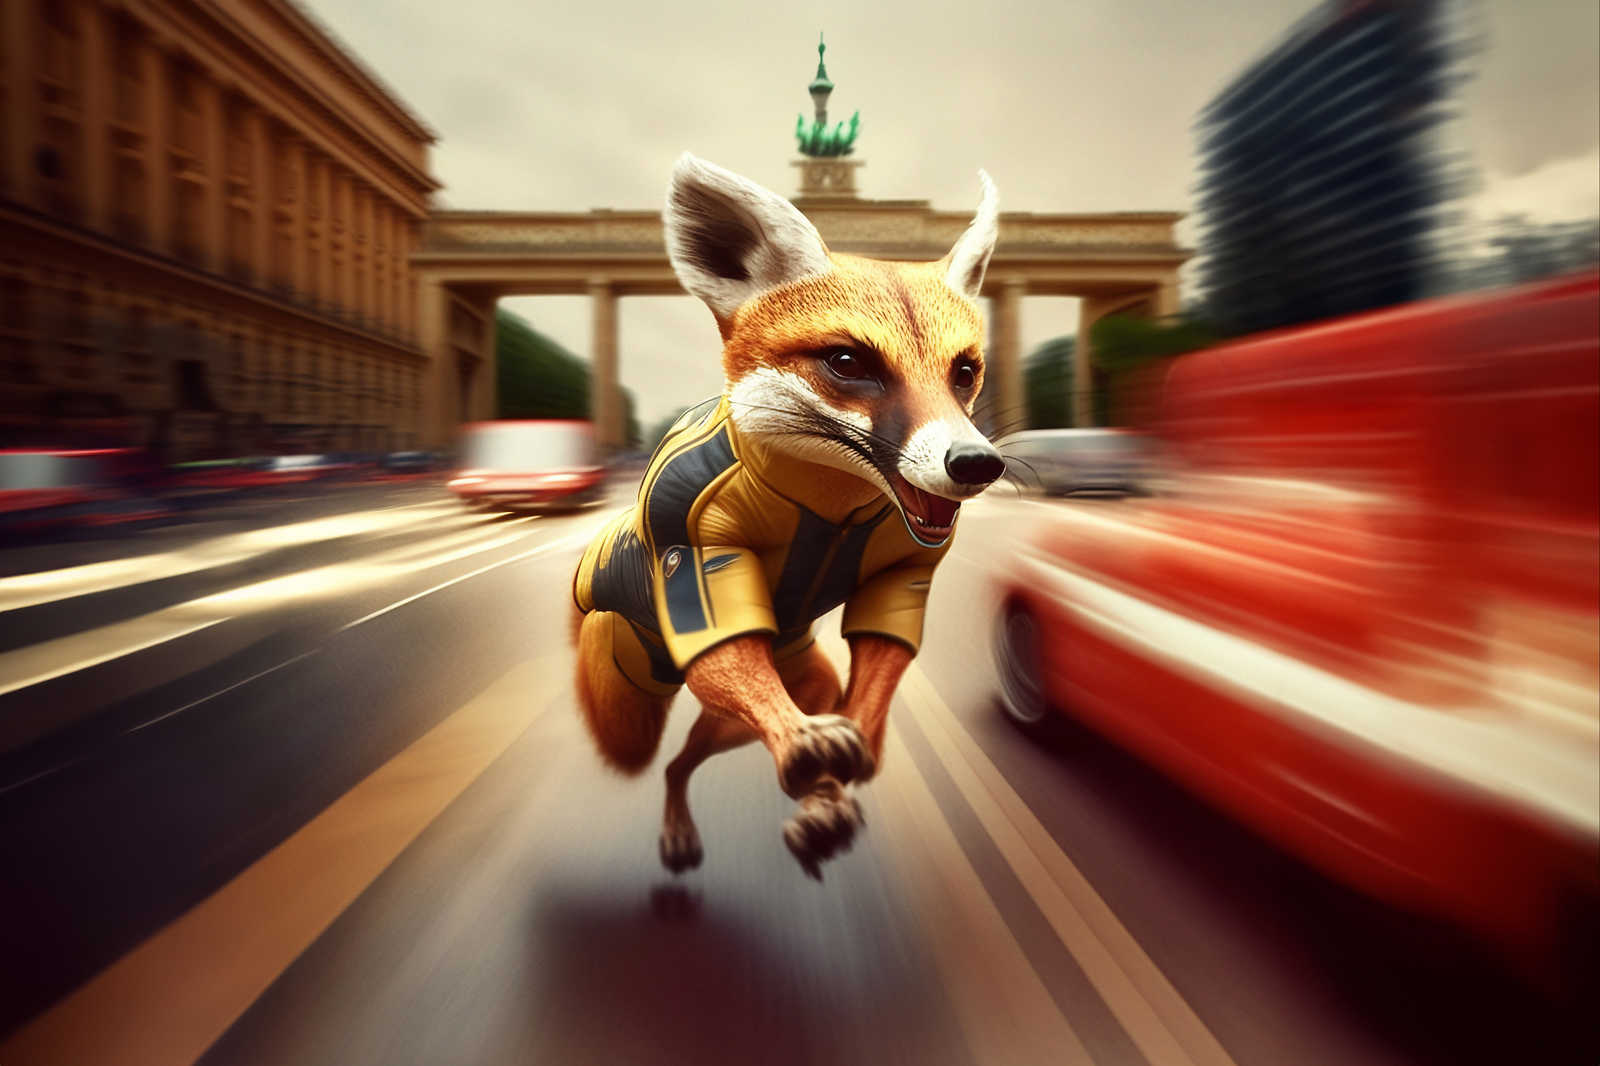             KI-Leinwandbild »fast fox« – 120 cm x 80 cm
        